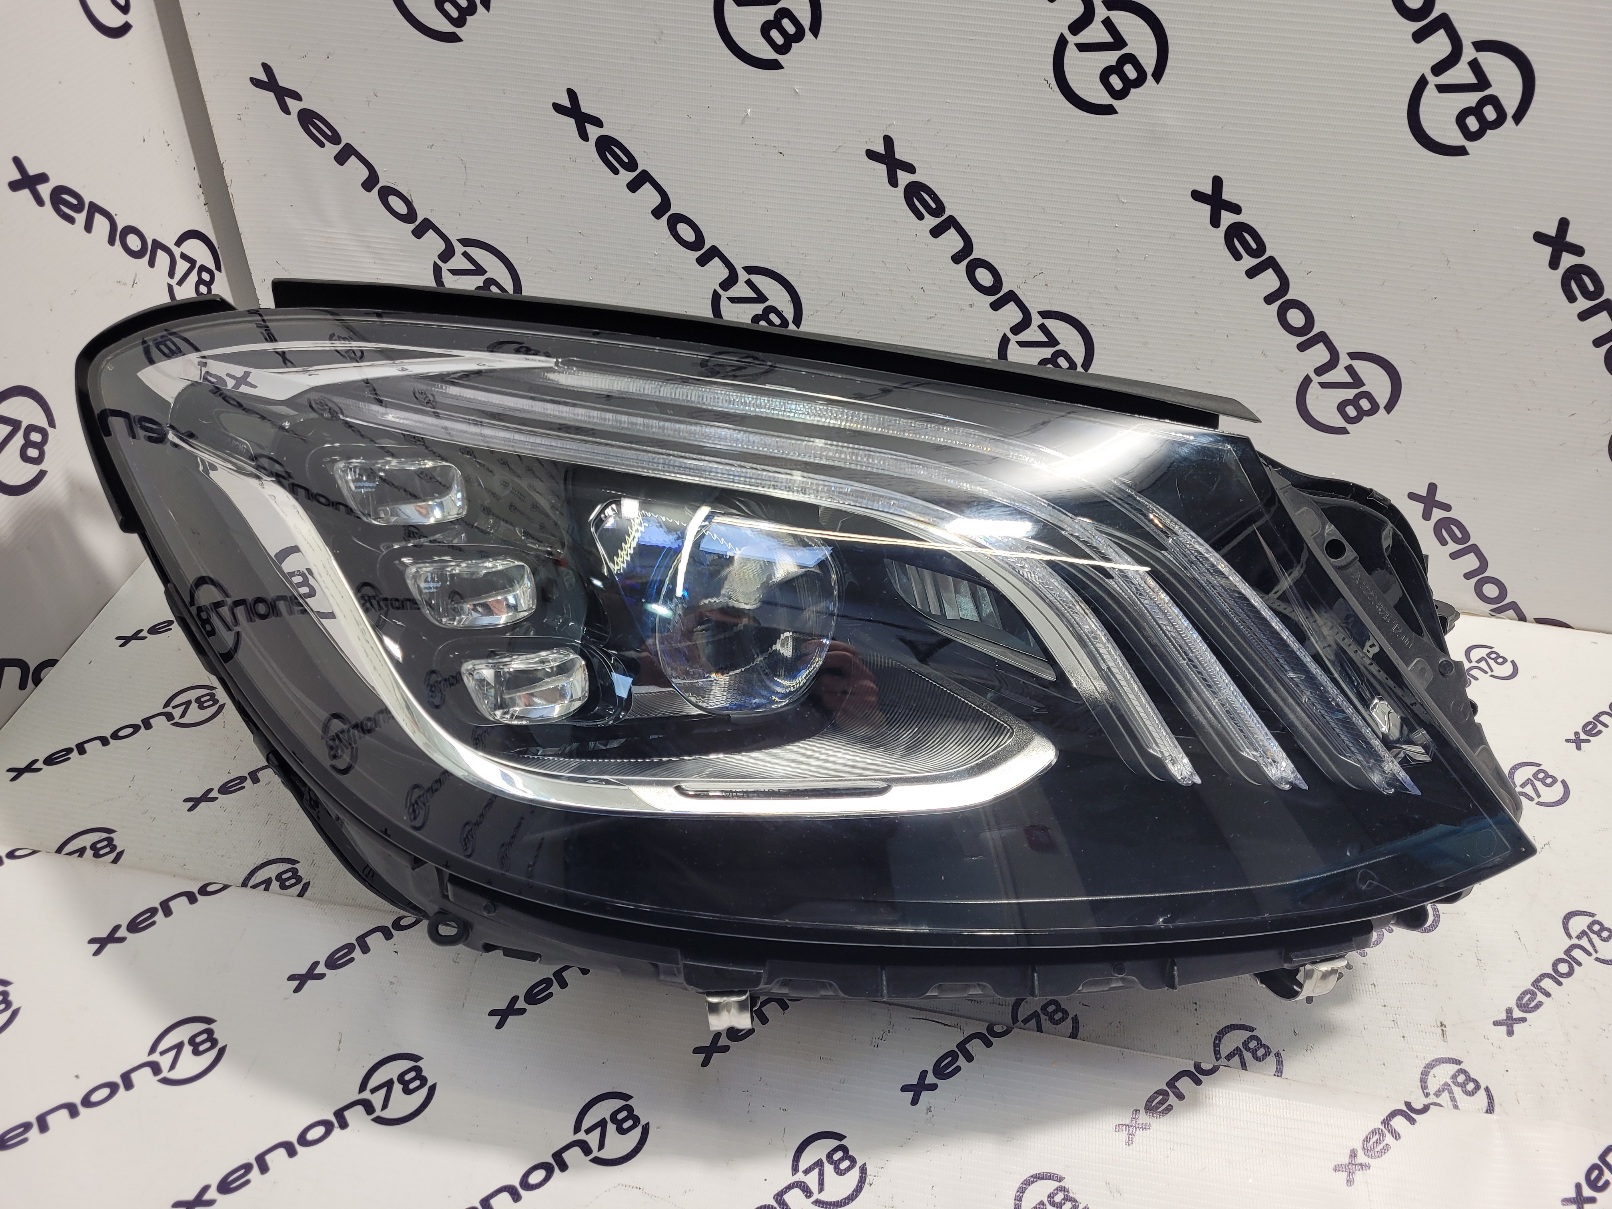 Фара Mercedes-Benz S-class(W222рест.) правая A2229068805 MULTIBEAM LED бу 19г. Новое стекло.Л0